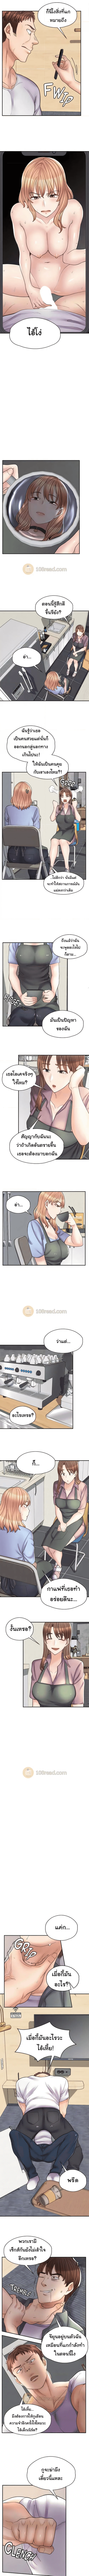 Erotic Manga CafÃ© Girls 11 (2)